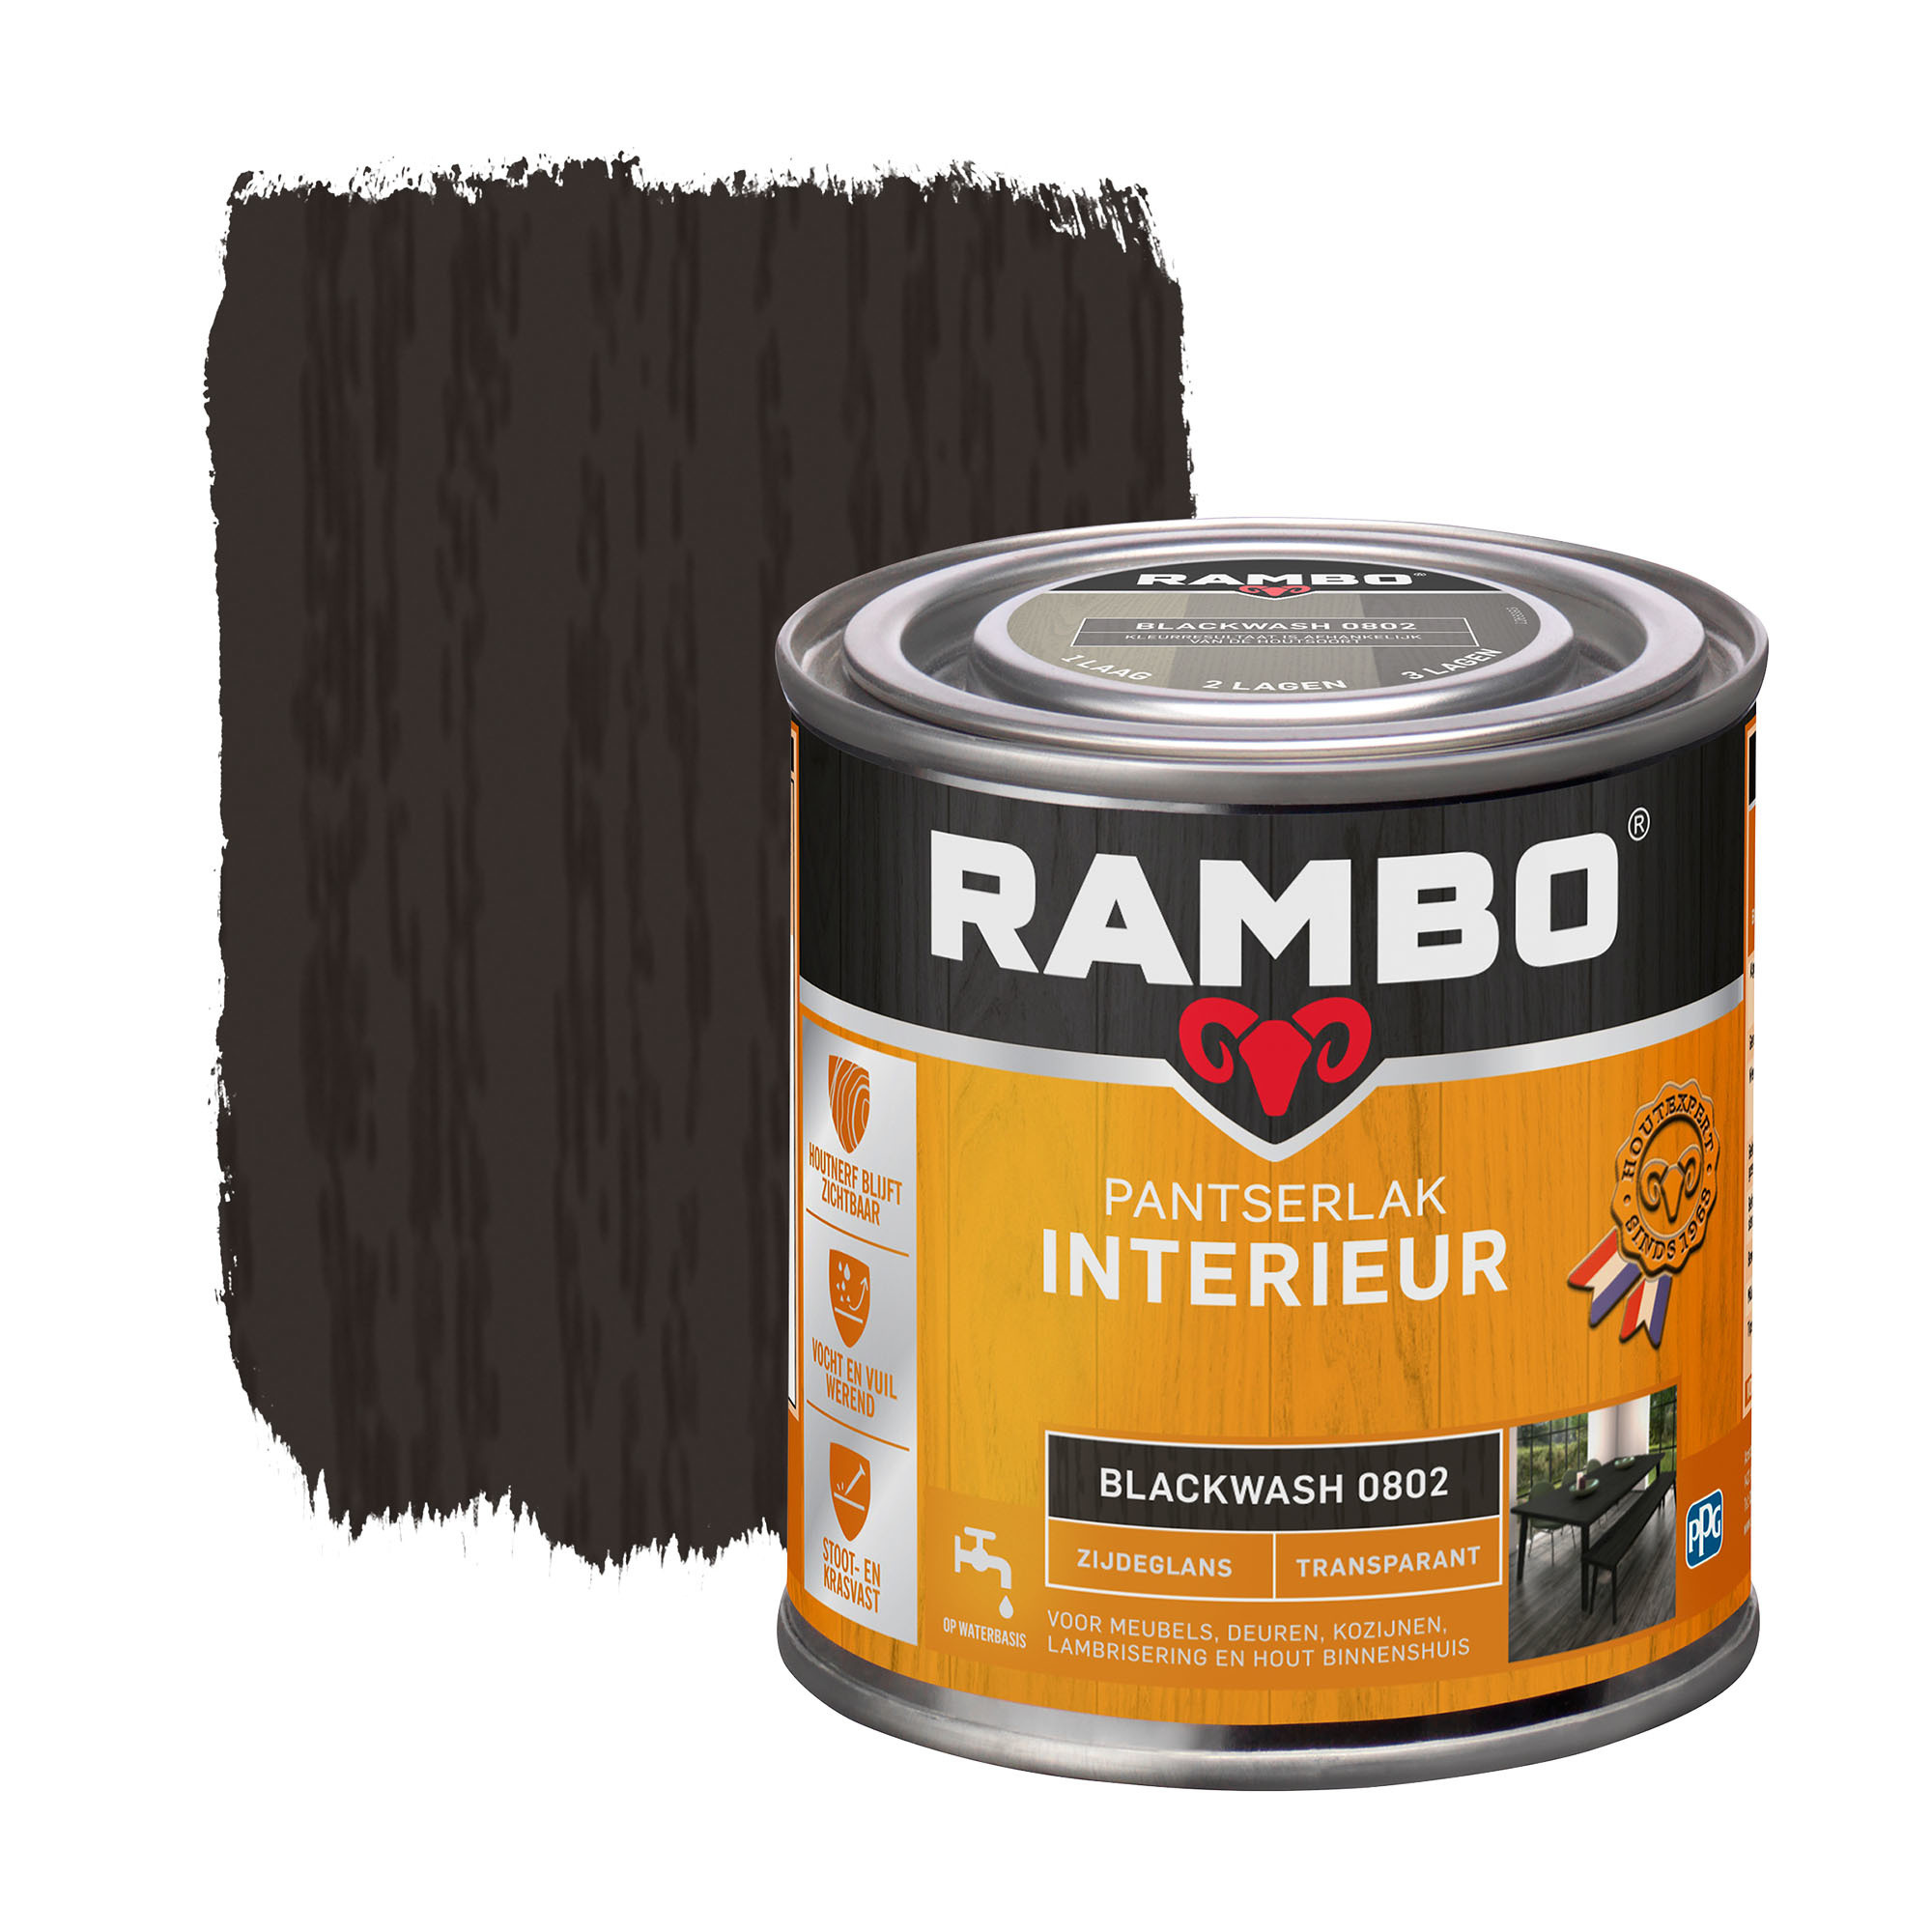 Rambo Pantserlak Interieur Transparant Zijdeglans - Blackwash